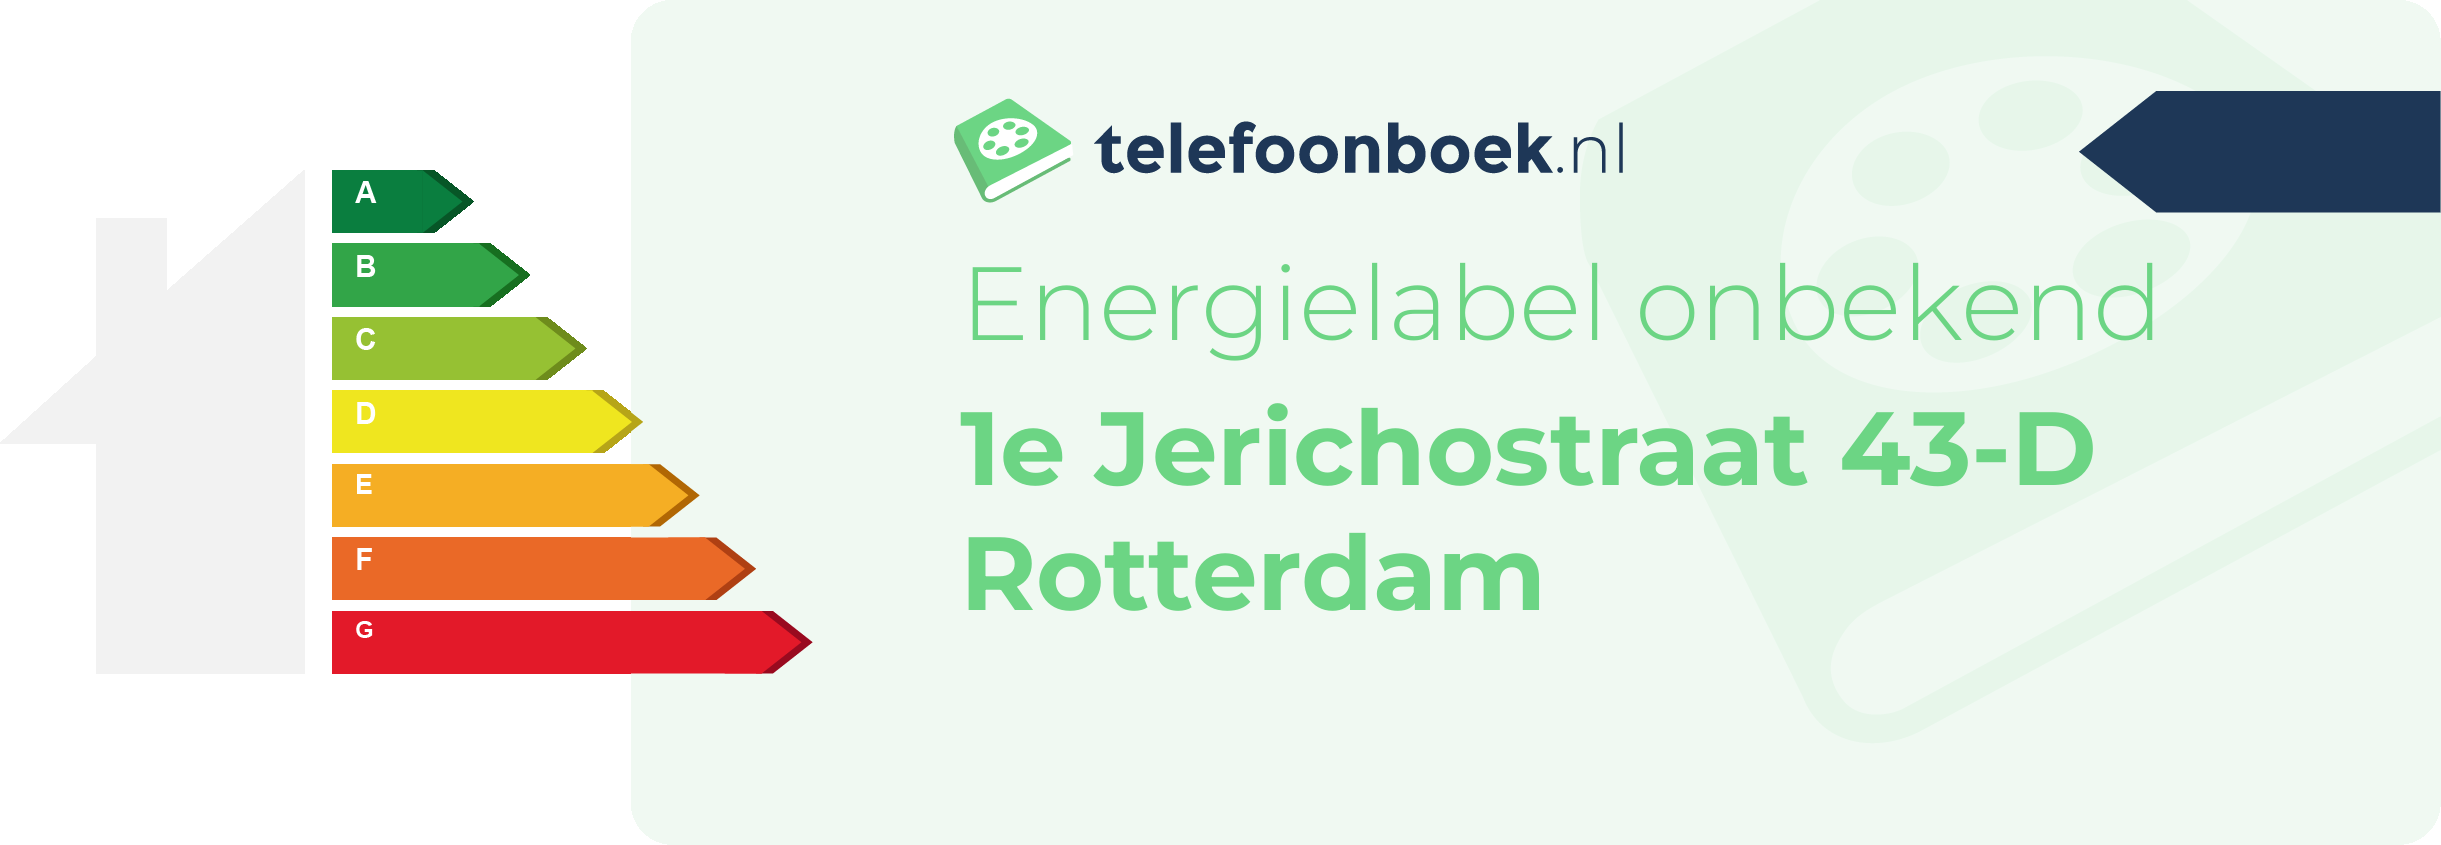 Energielabel 1e Jerichostraat 43-D Rotterdam